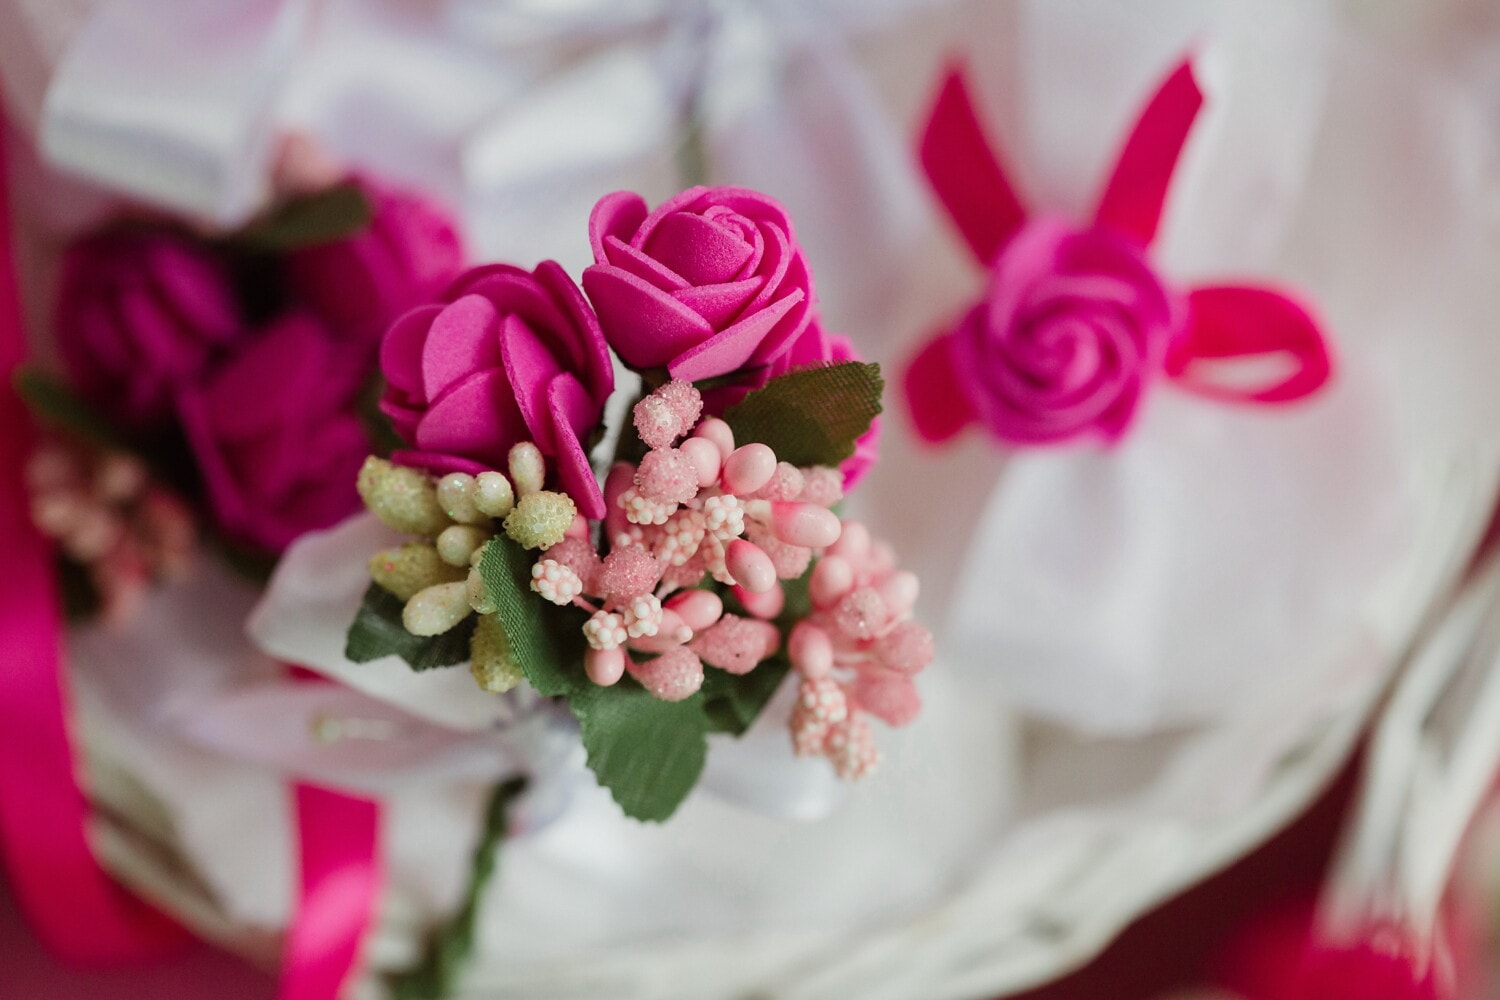 mawar, dekorasi, romantis, pastel, hadiah, mewah, karangan bunga, bunga, Cinta, bunga